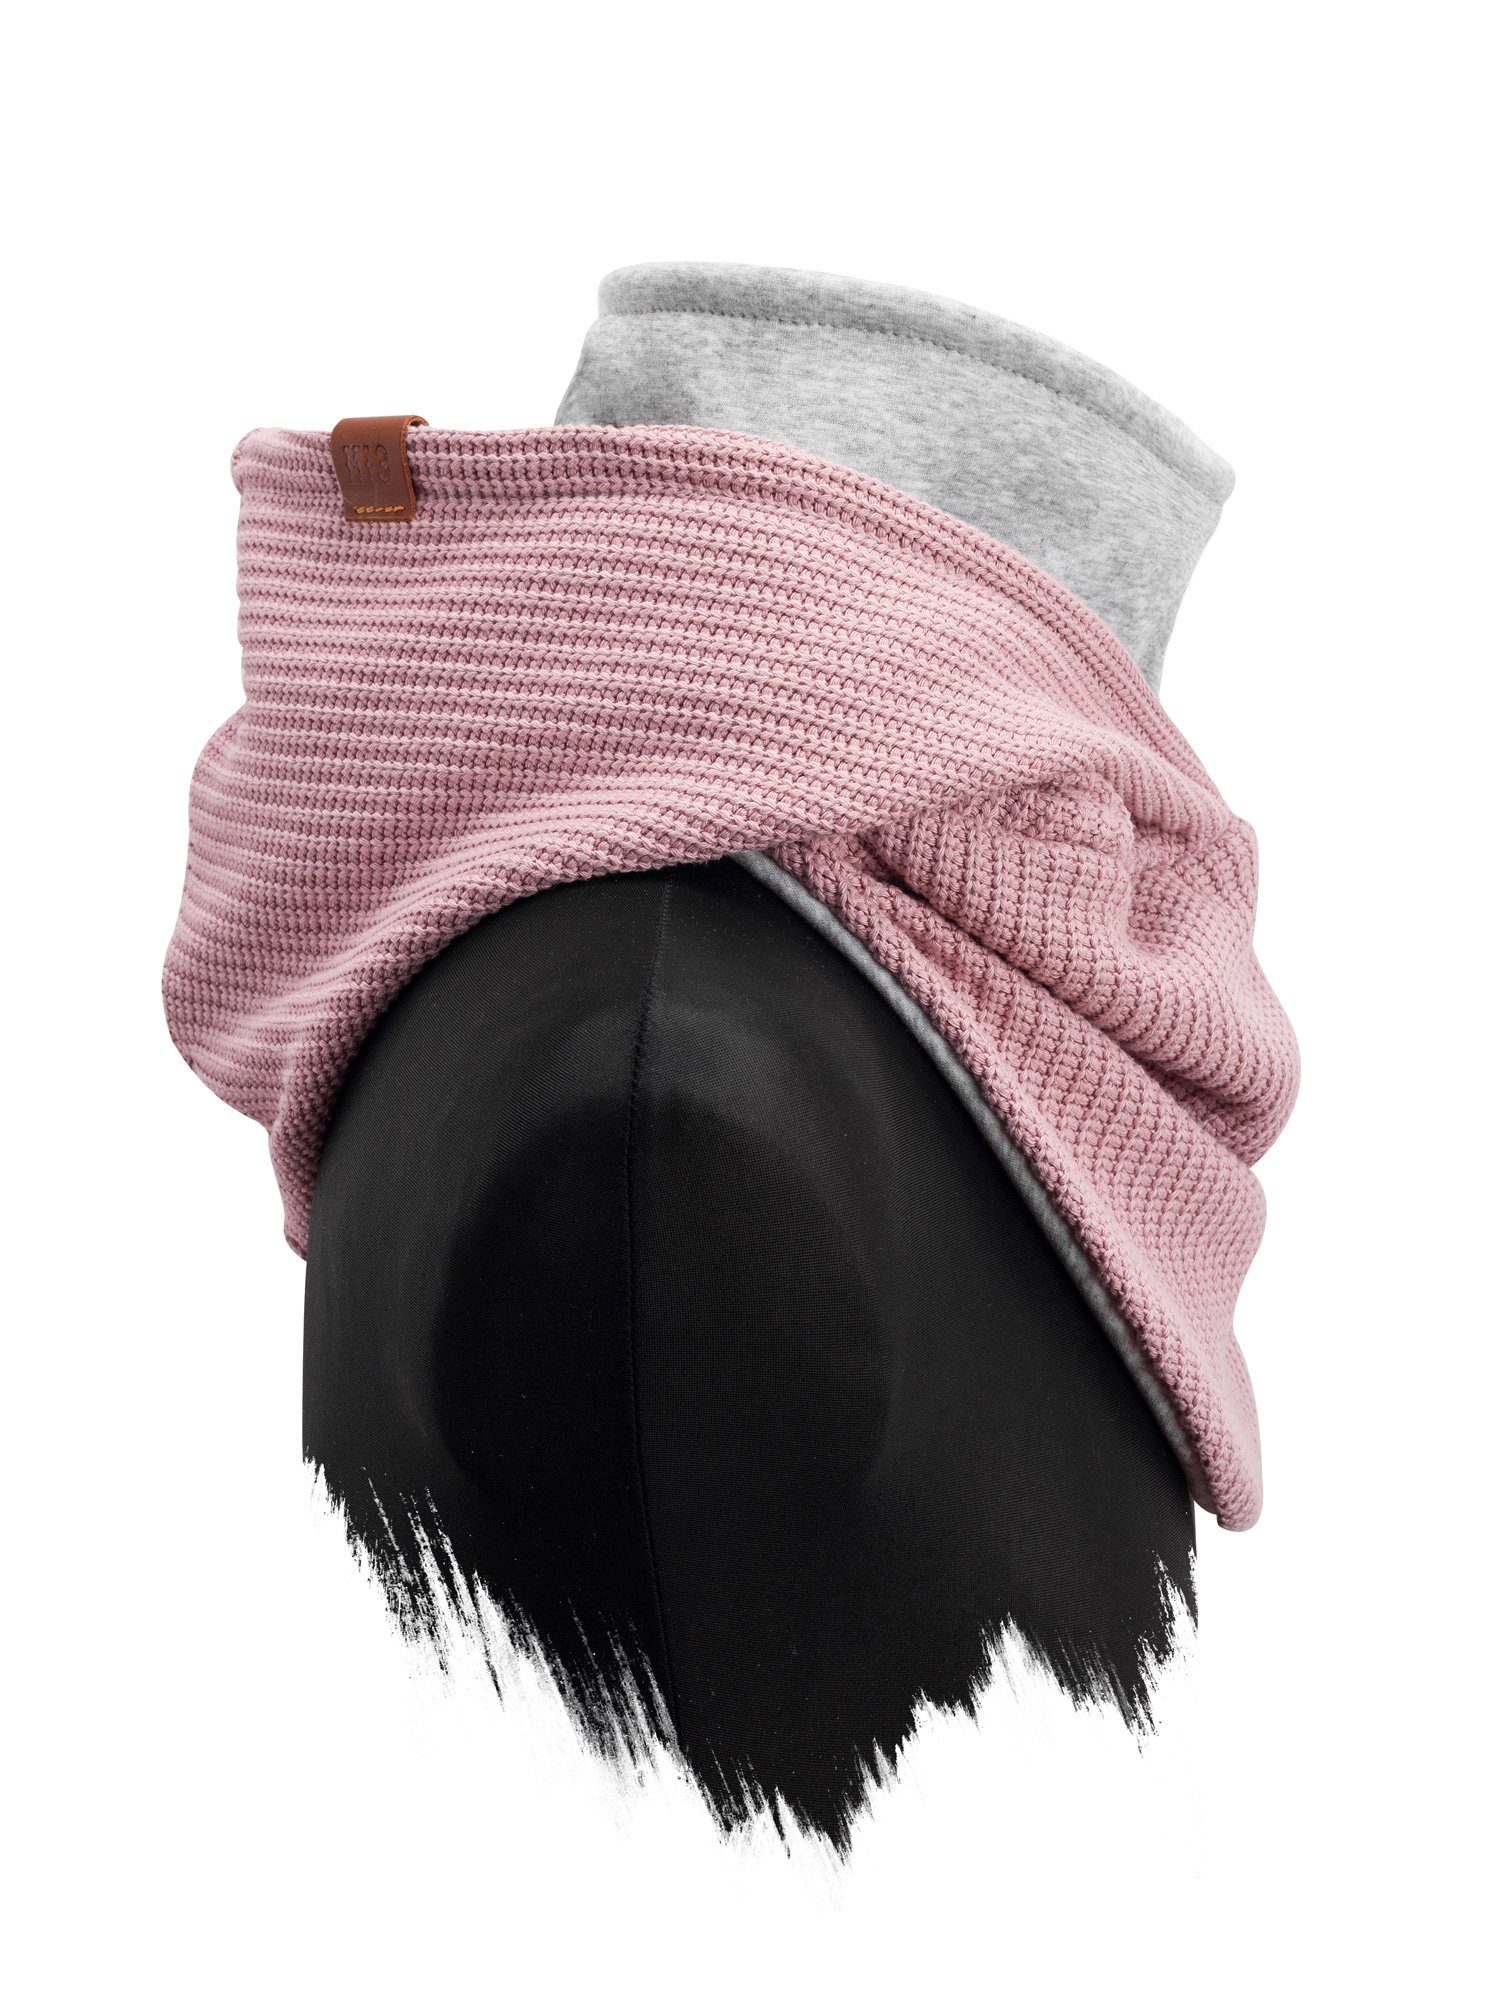 Windbreaker Schal, Hooded integriertem Modeschal Loop Kapuzenschal, mit - Rose Strickschal, Knit Manufaktur13